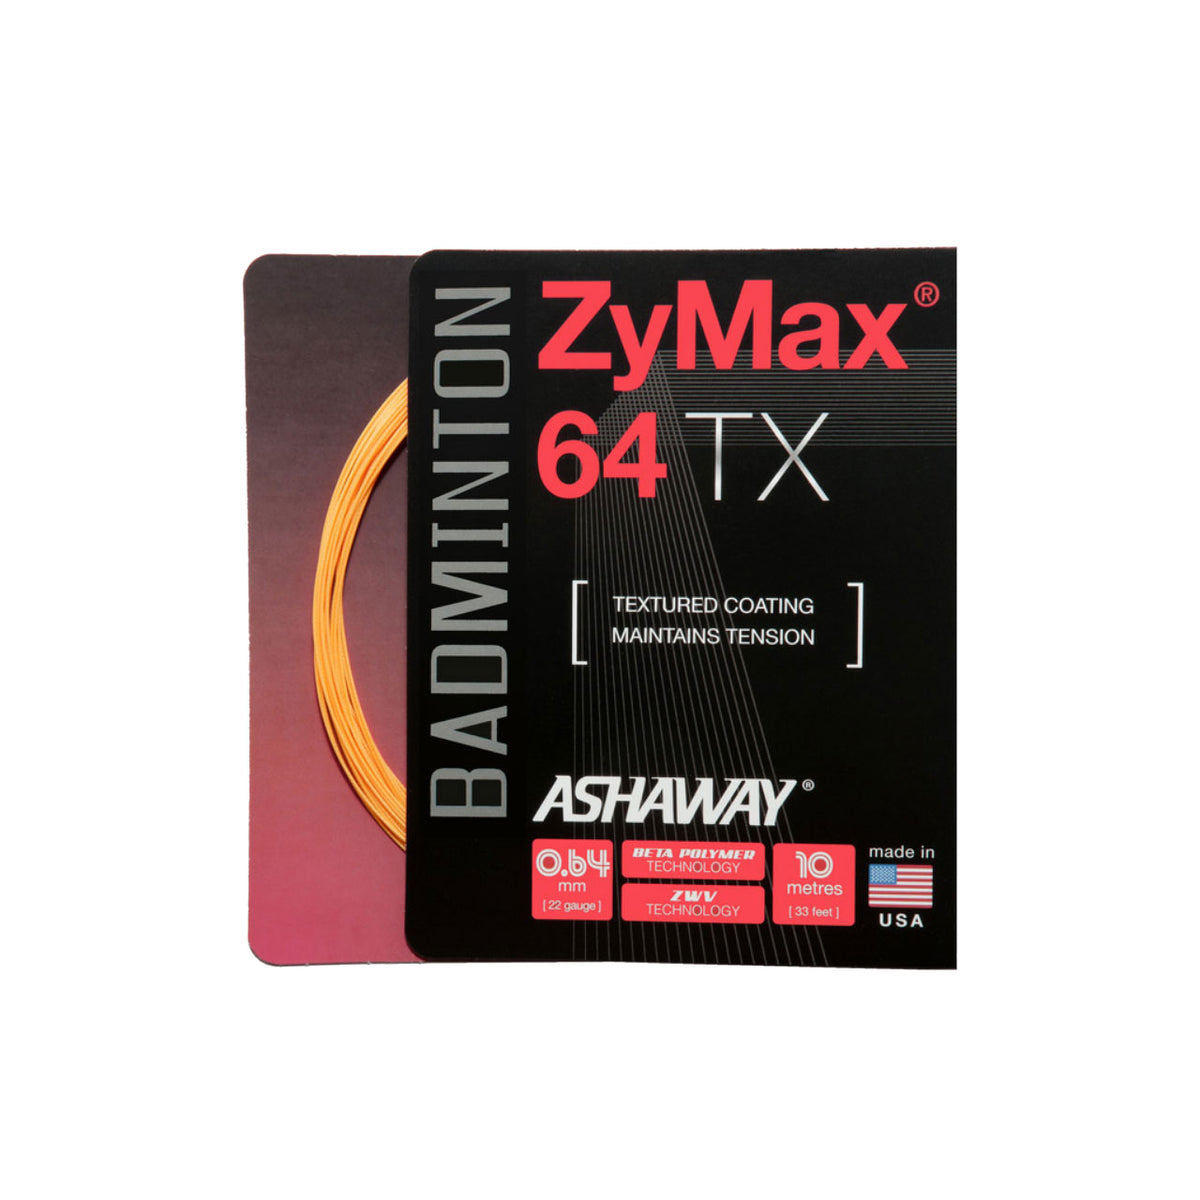 Ashaway Zymax 64TX String (10m set) Orange